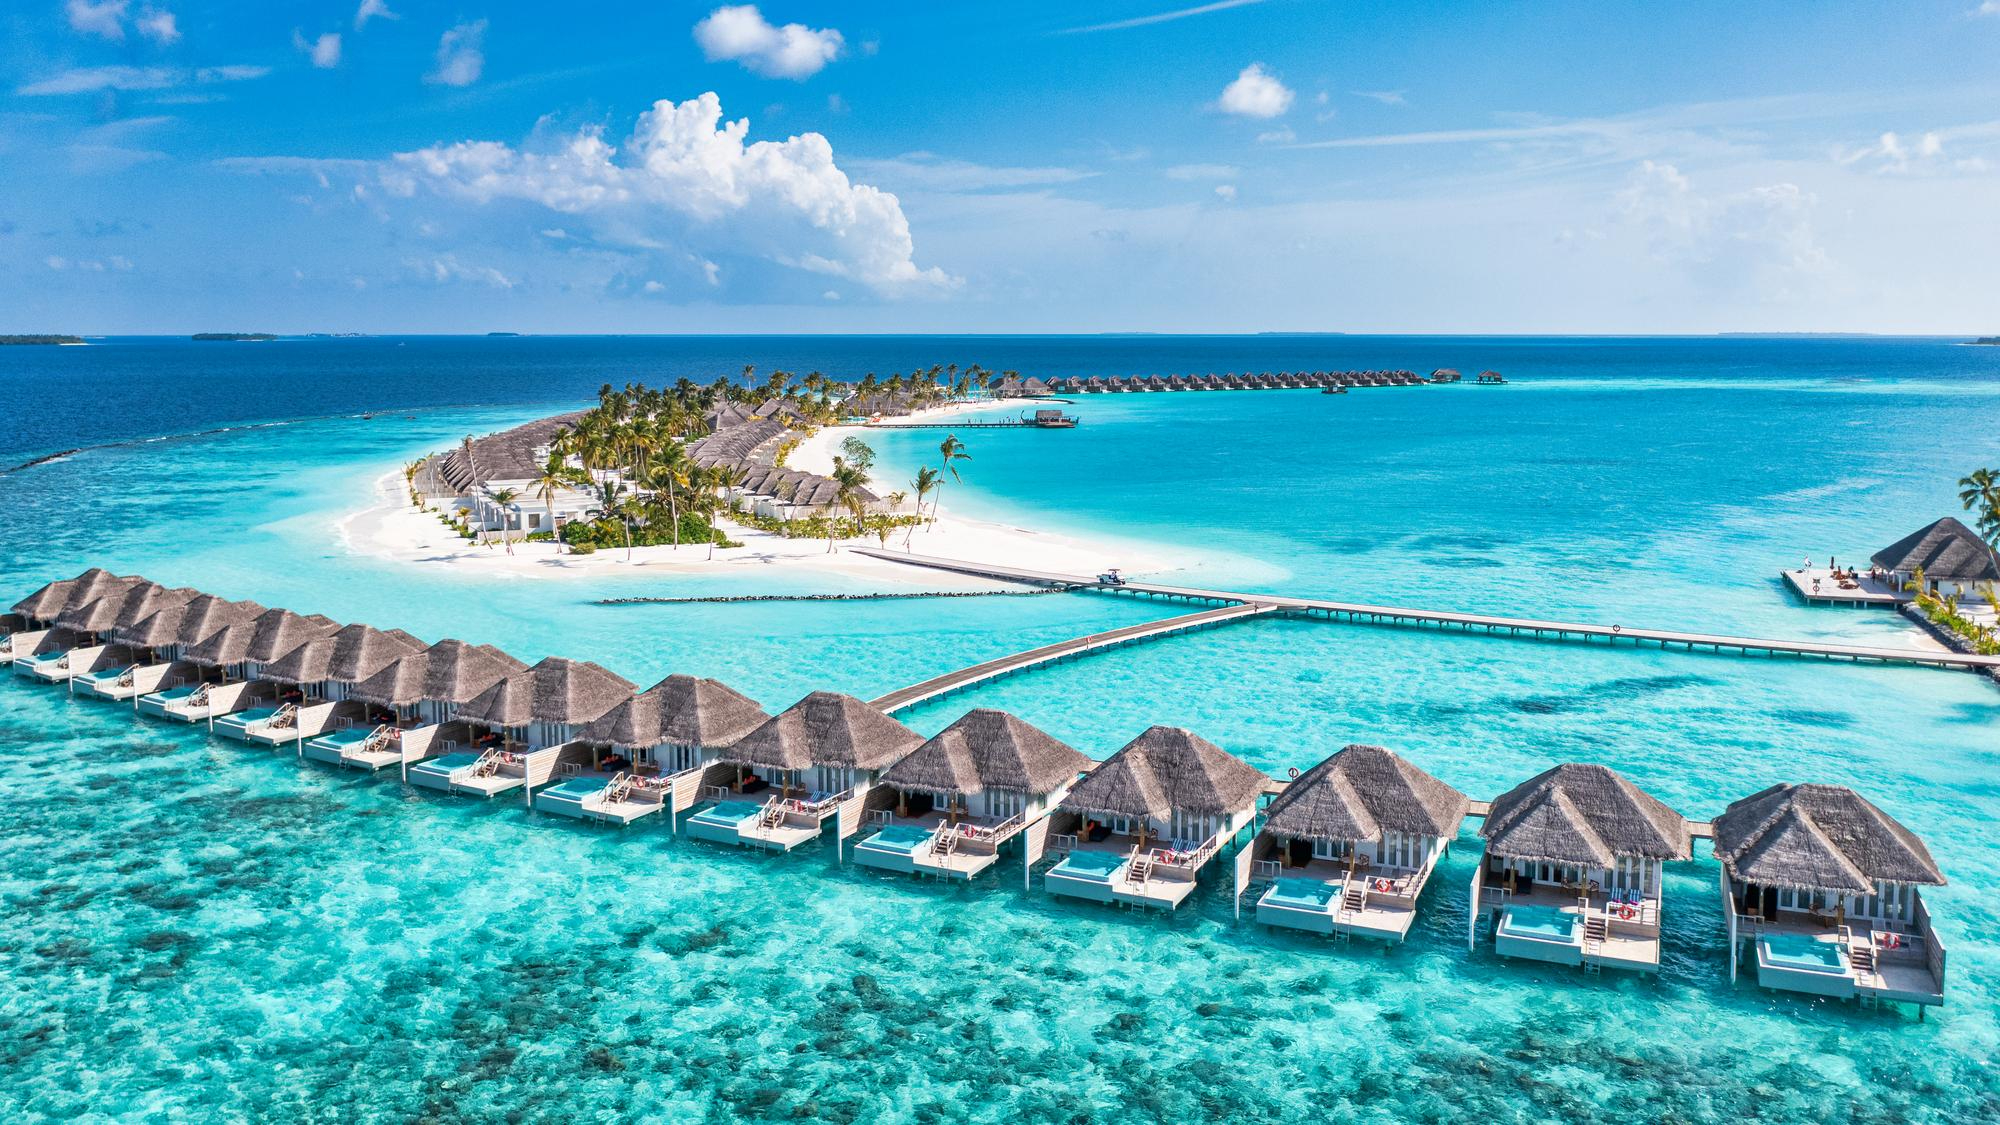 Maldives Tours